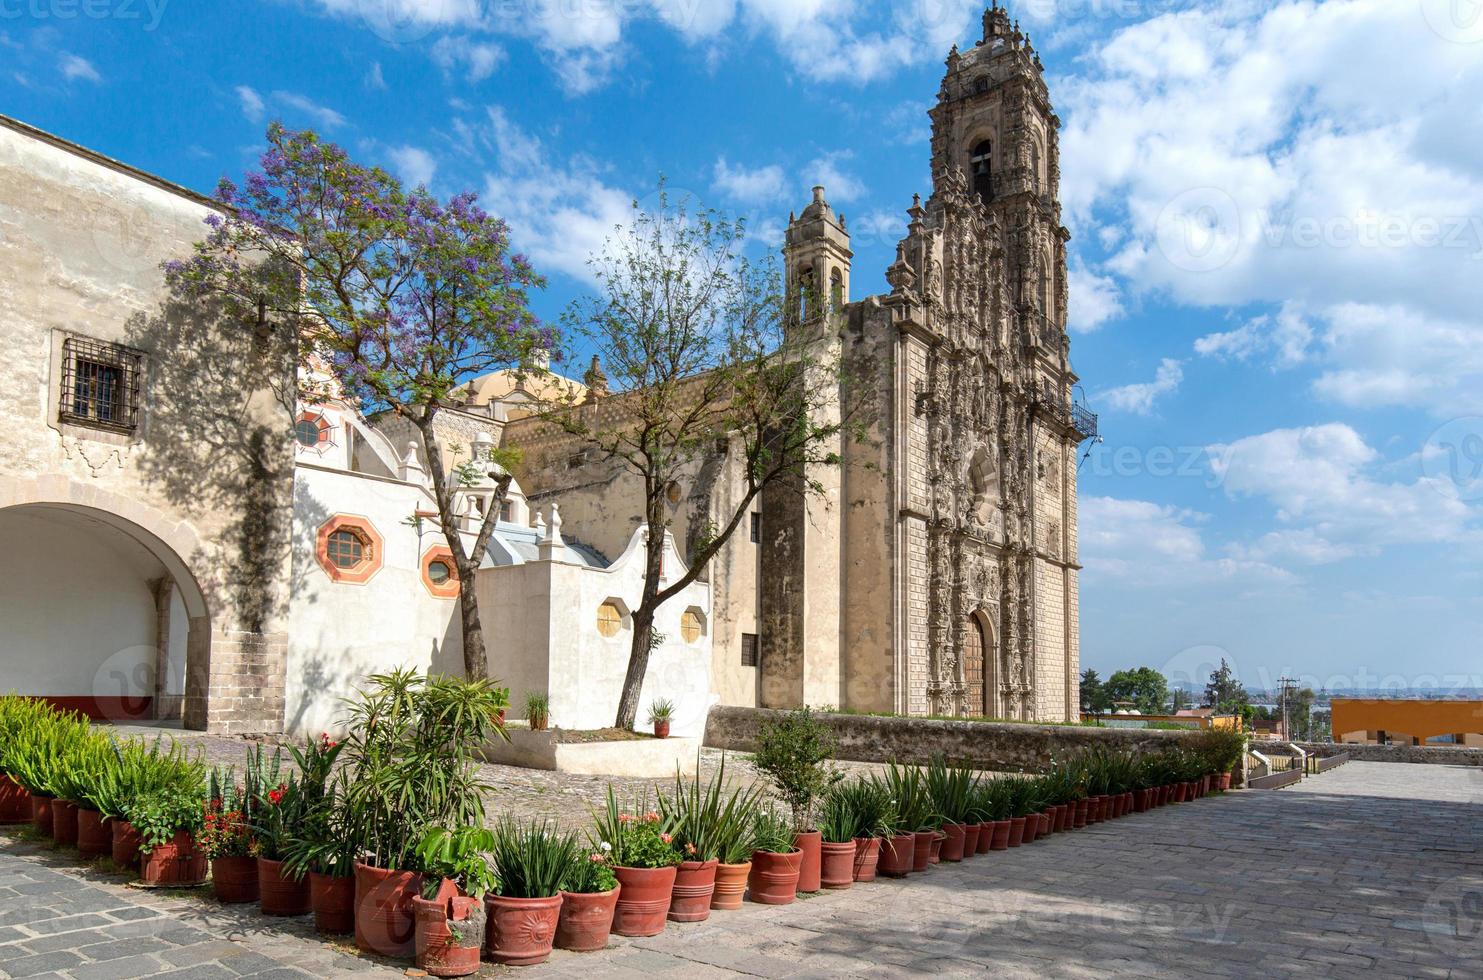 Mexico, Tepotzotlan central plaza and Francisco Javier Church in historic city center photo